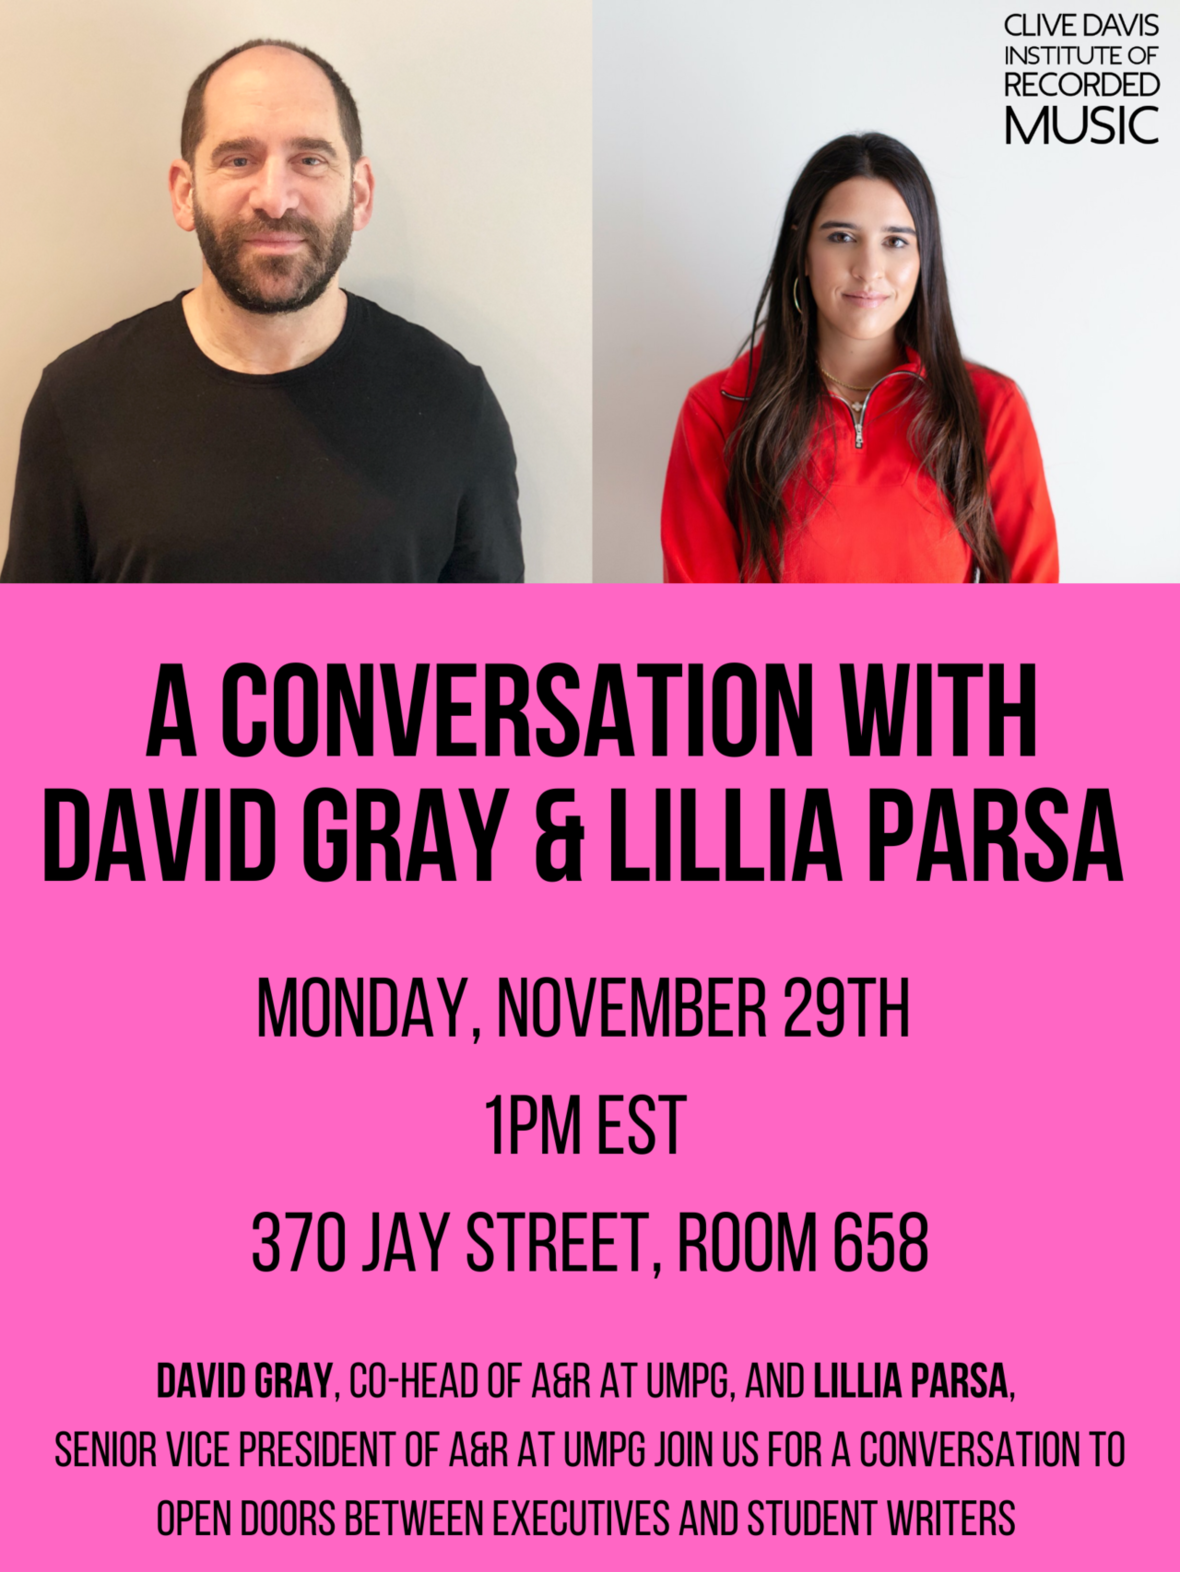 A Conversation With David Gray & Lillia Parsa